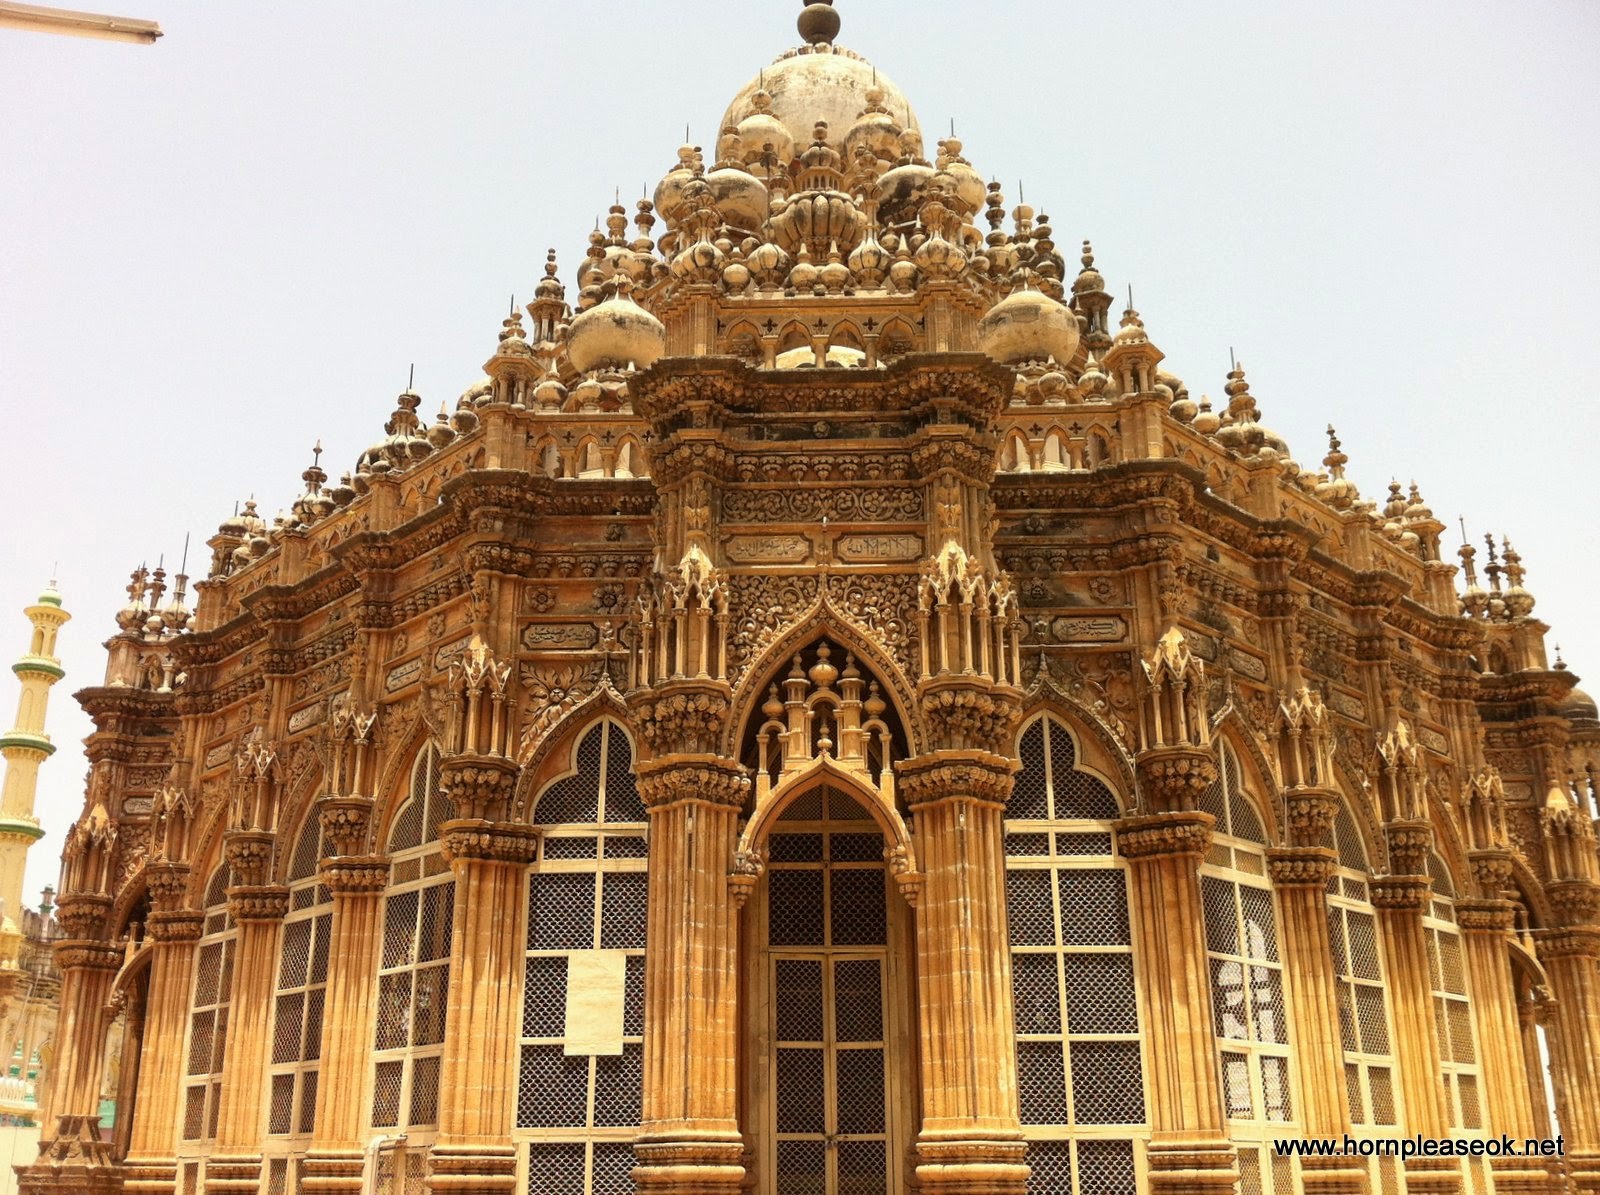 READ Indo-Islamic architecture IN HERE | New Home Design